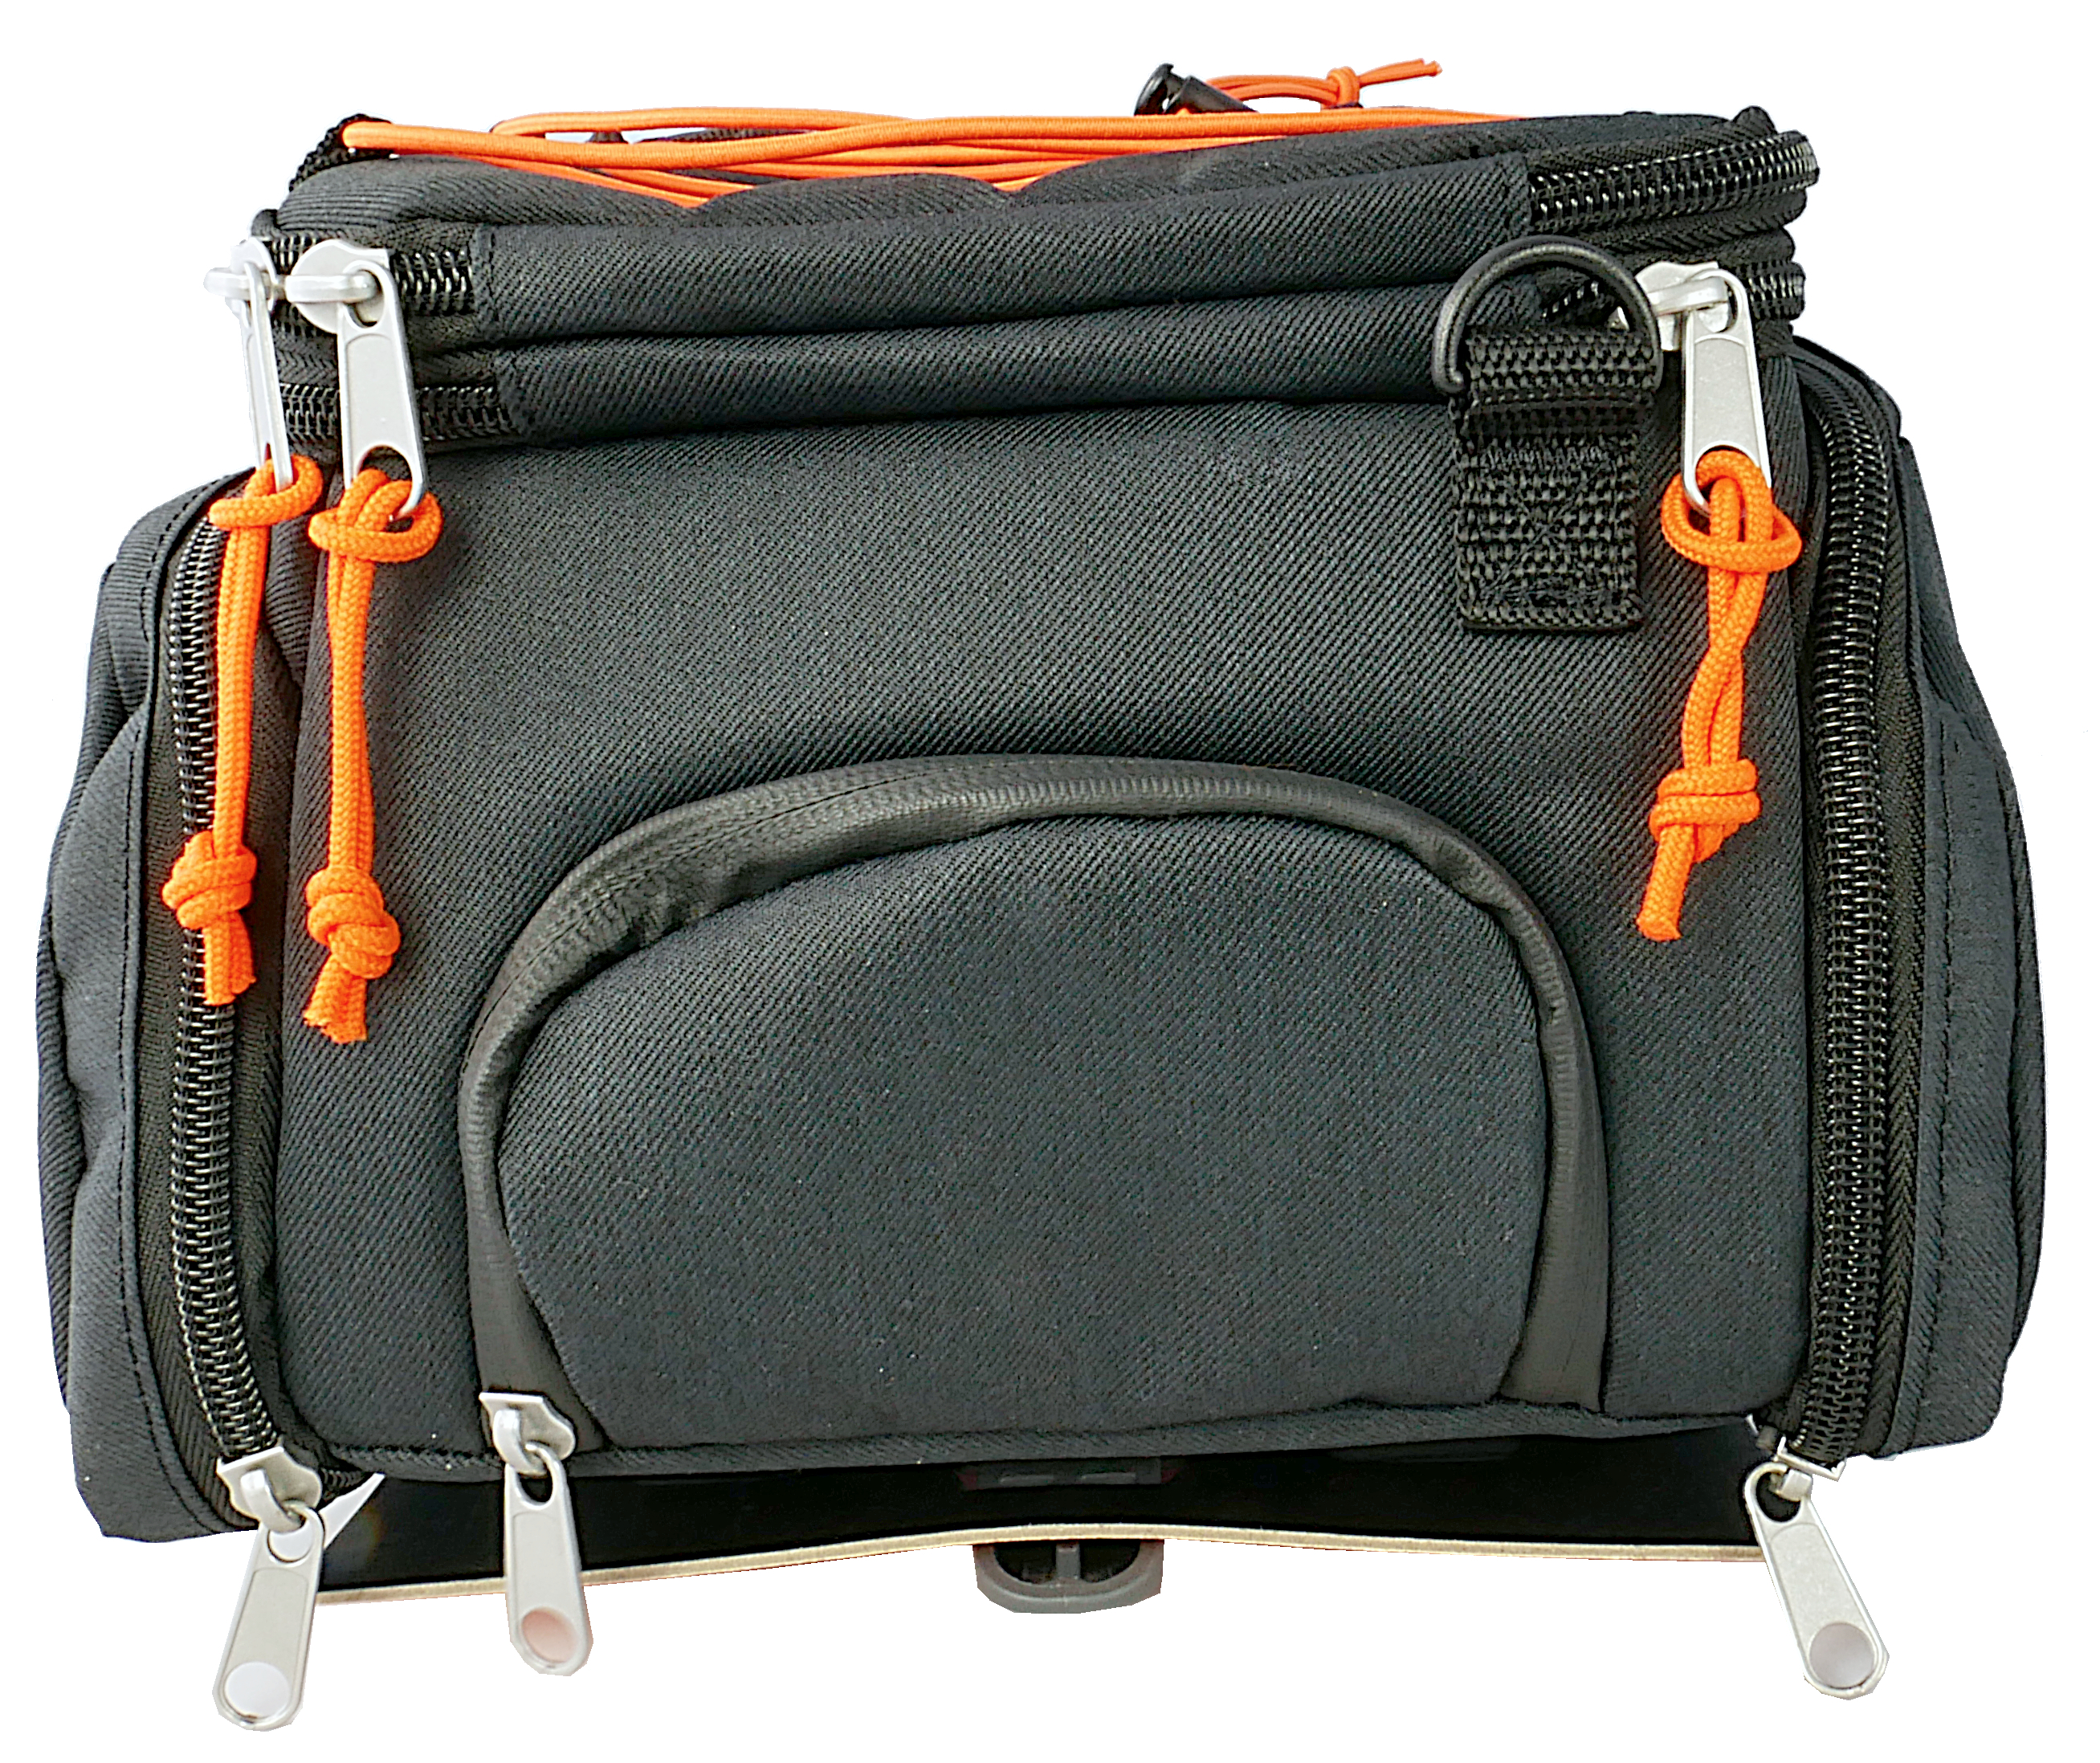 KTM Sport Trunk Bag - carrier bag 32l, ideal travel accessory